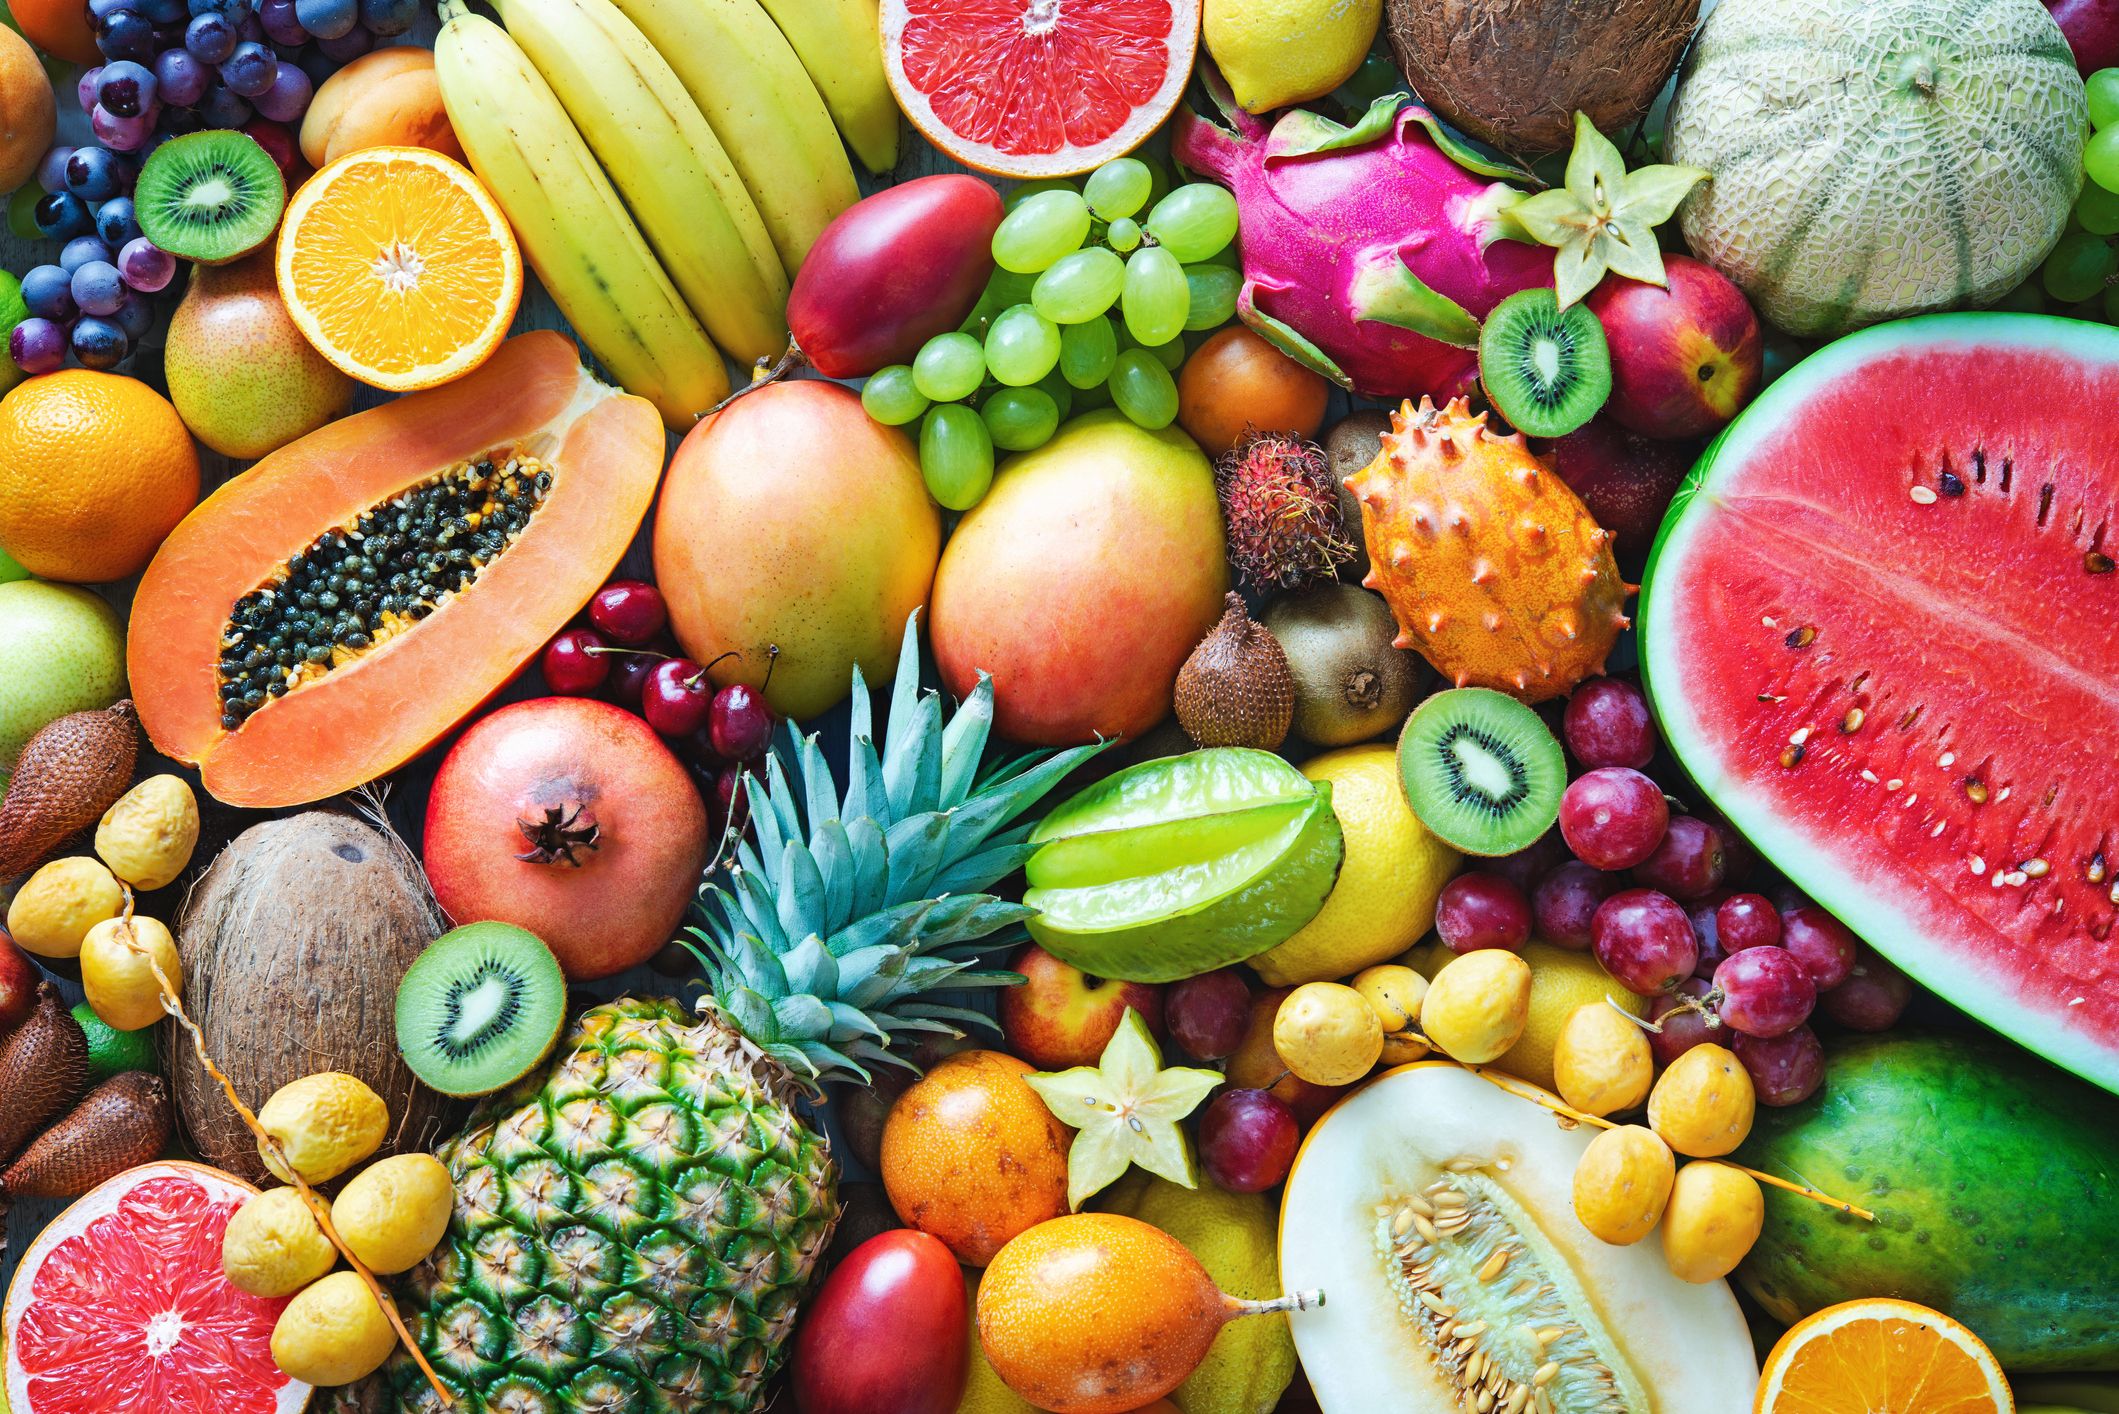 Fact about fruits, आप भी तो नहीं खाते ज्यादा फल ? इन समस्याओं का बढ़ सकता ....